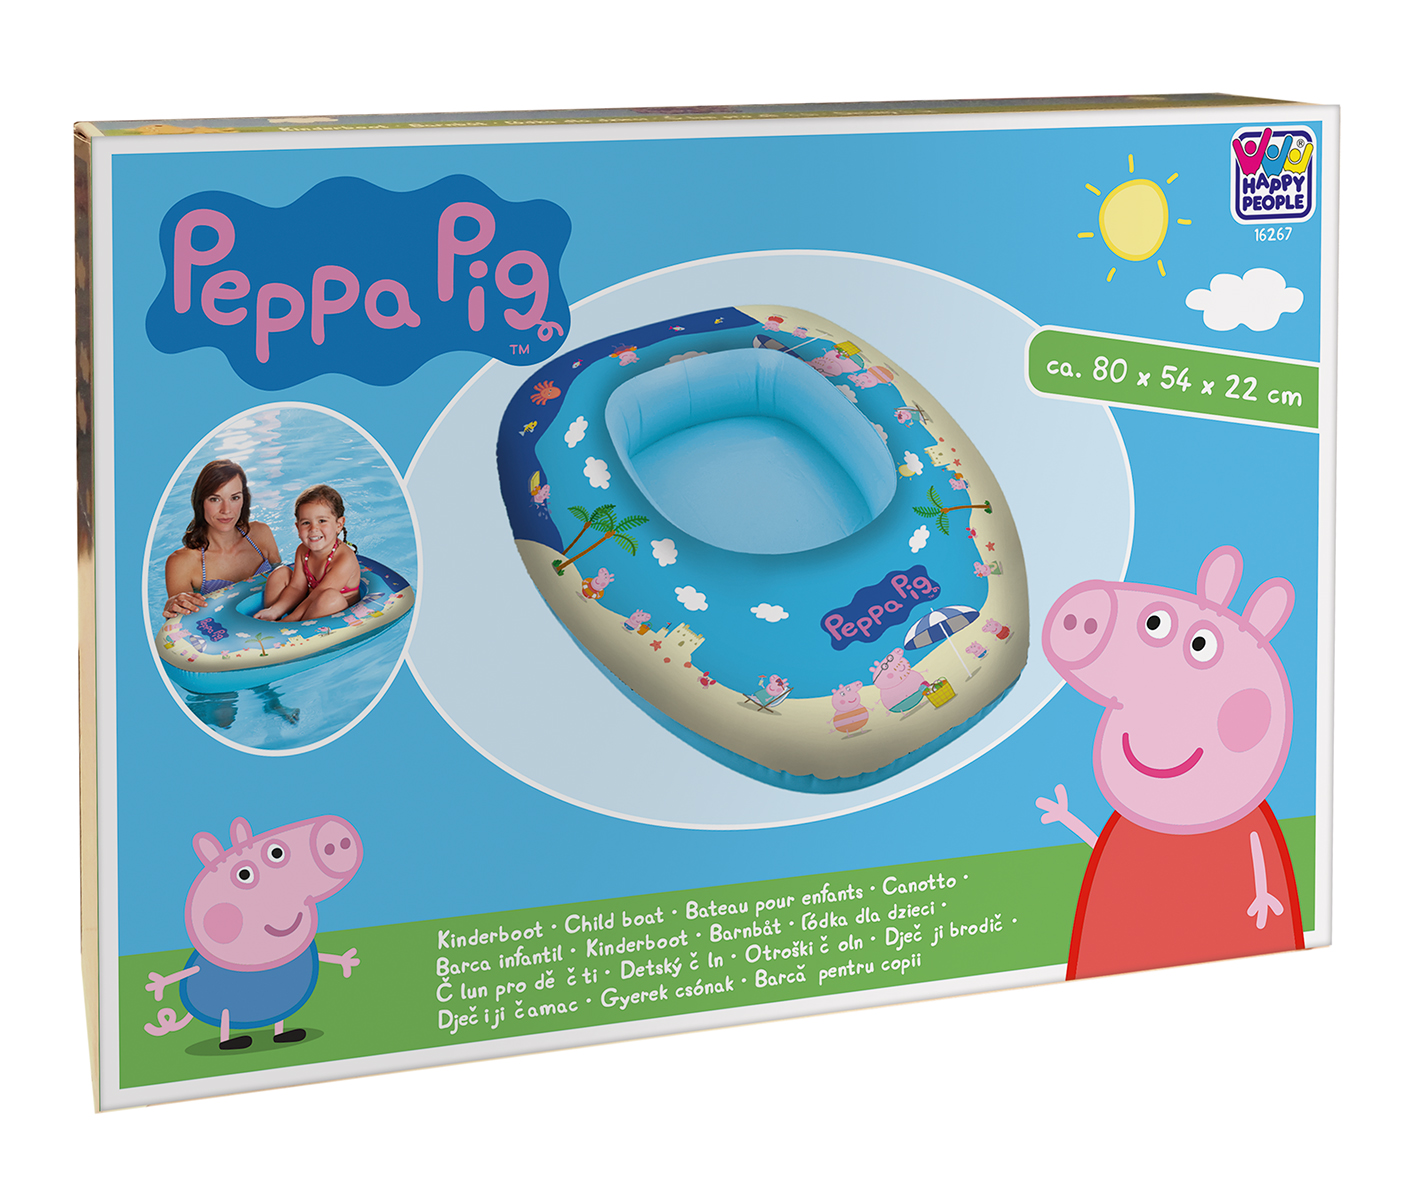 Happy People Peppa Pig Kinderboot, 80 x 54 x 22 cm